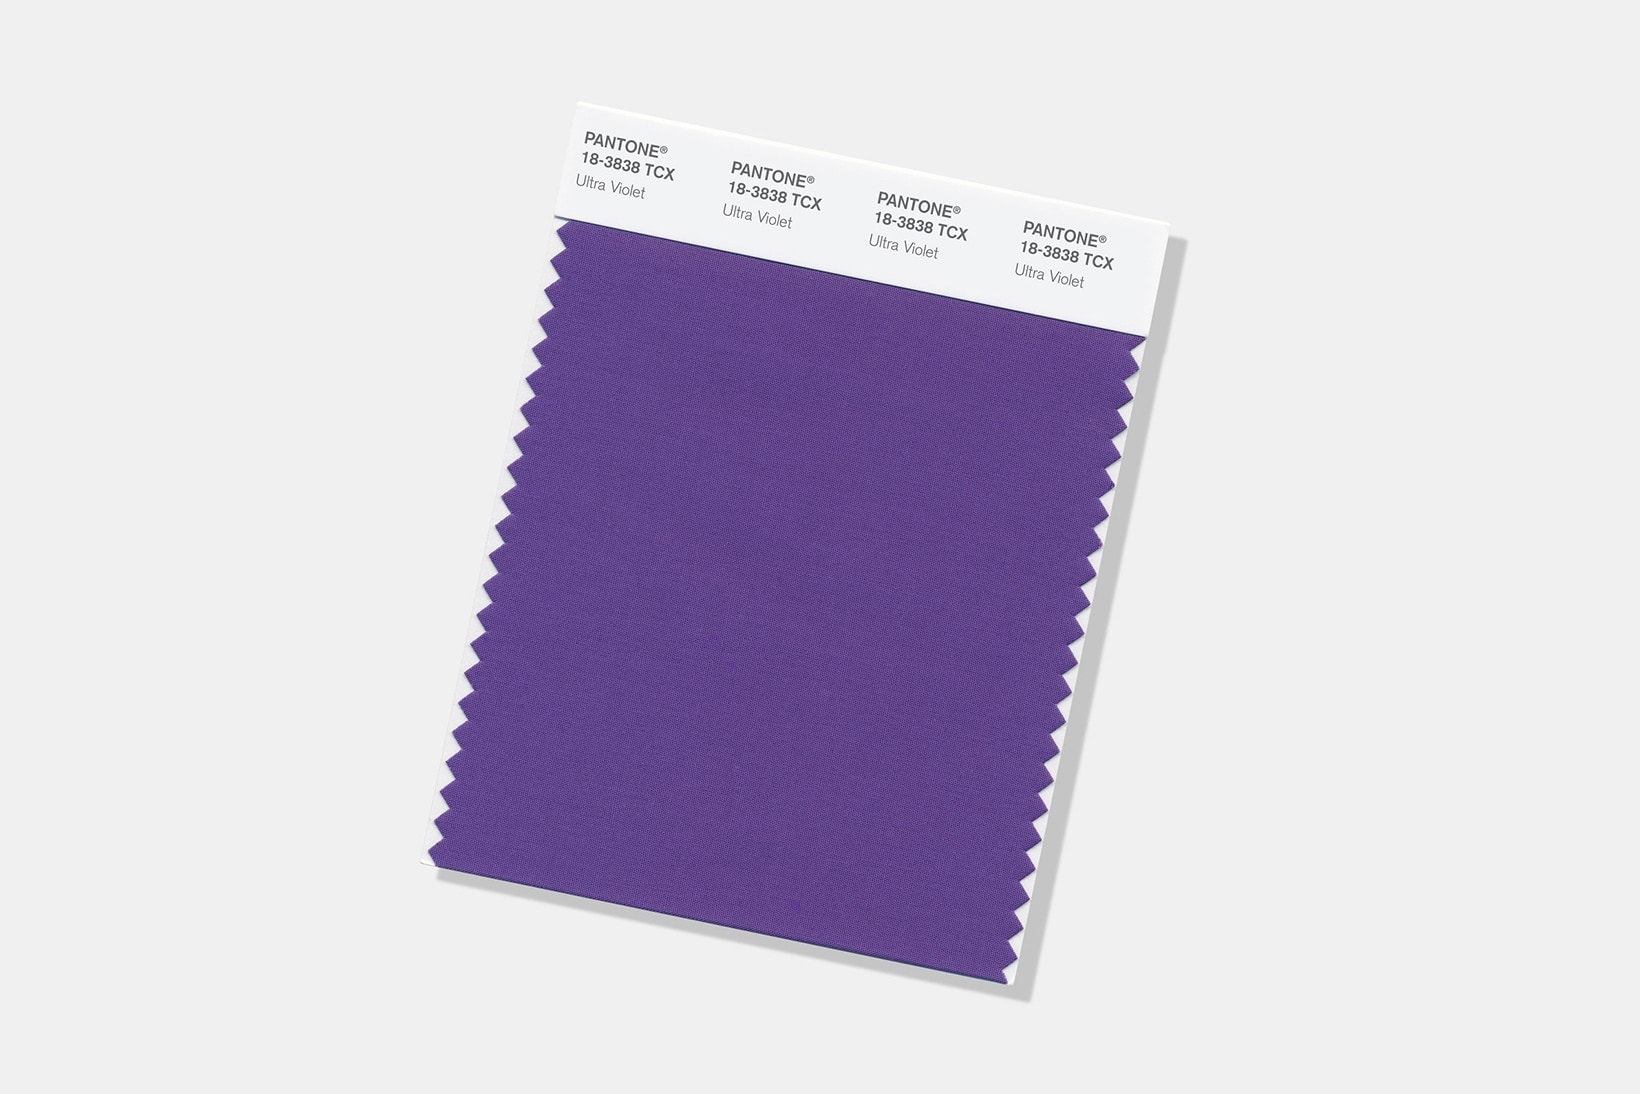 Pantone 公佈 2018 年度代表色－Ultra Violet